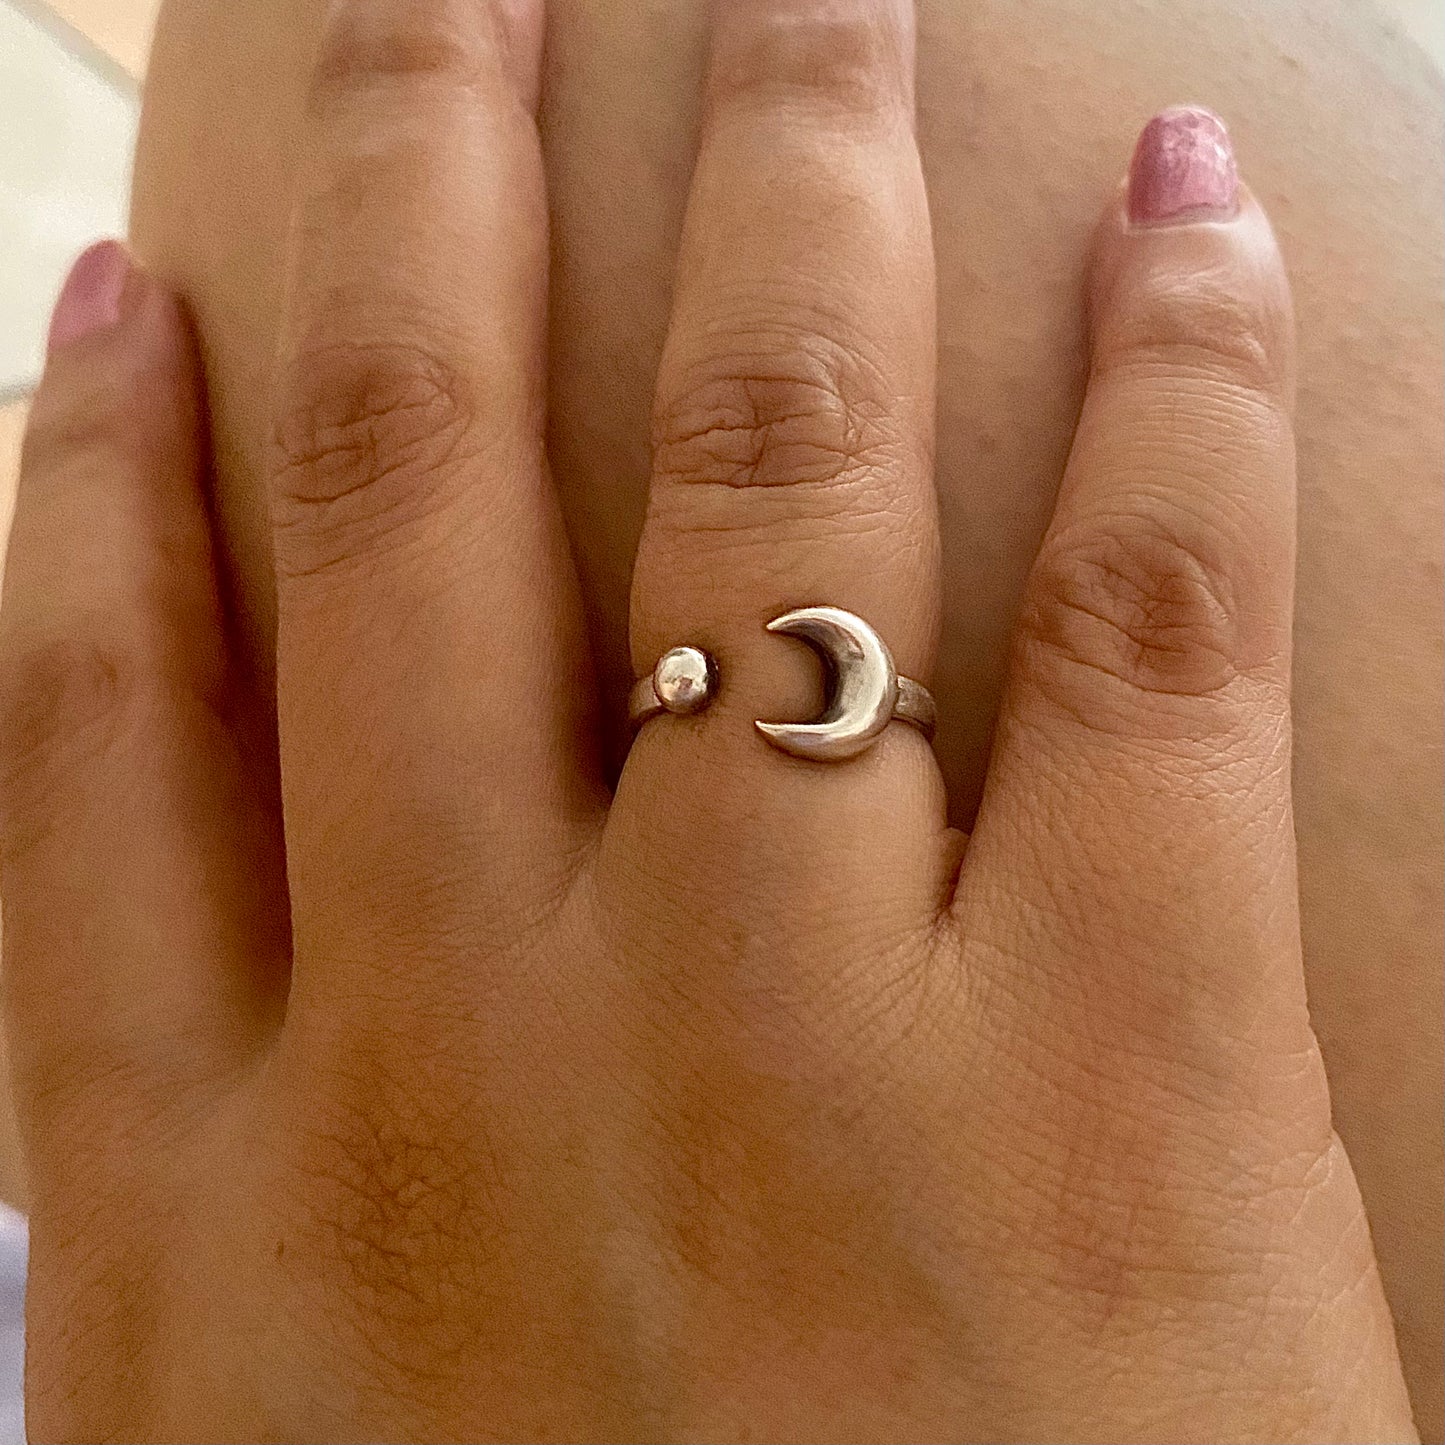 Lunar Pinki Finger or Ring